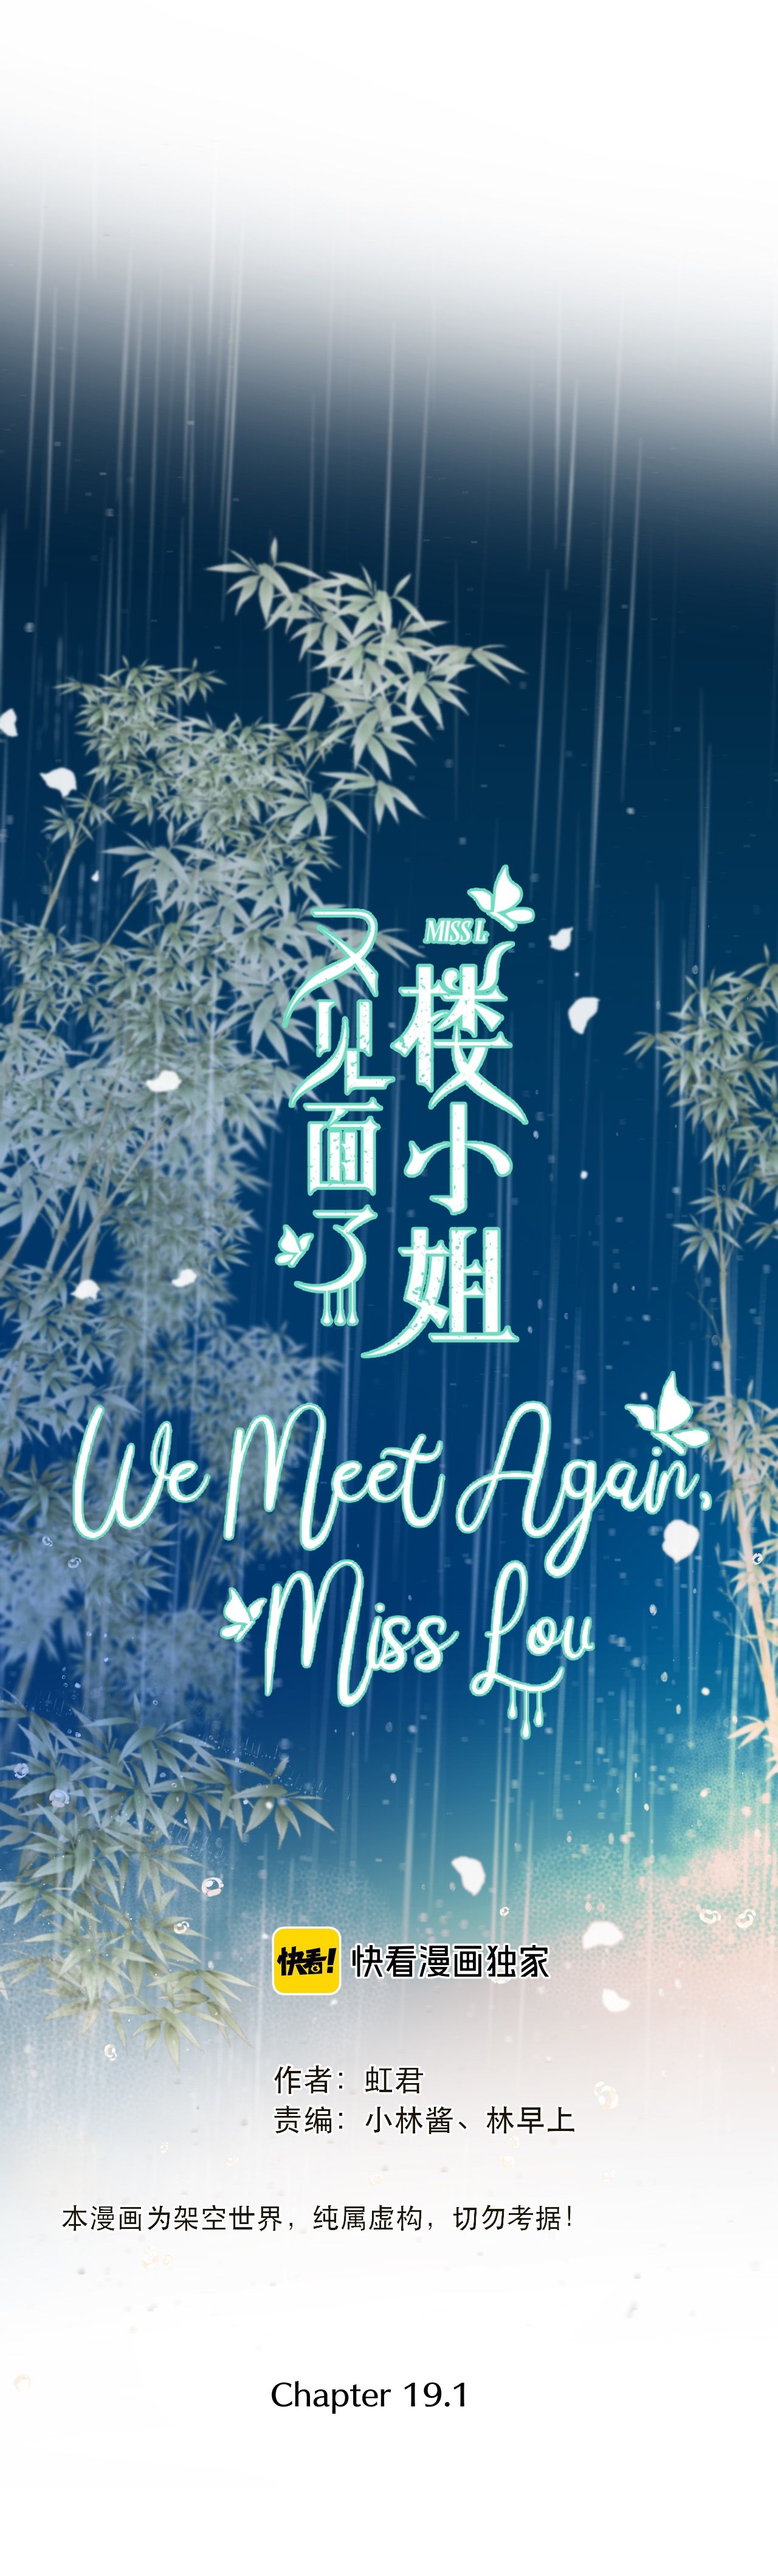 We Meet Again, Miss Lou - Page 2